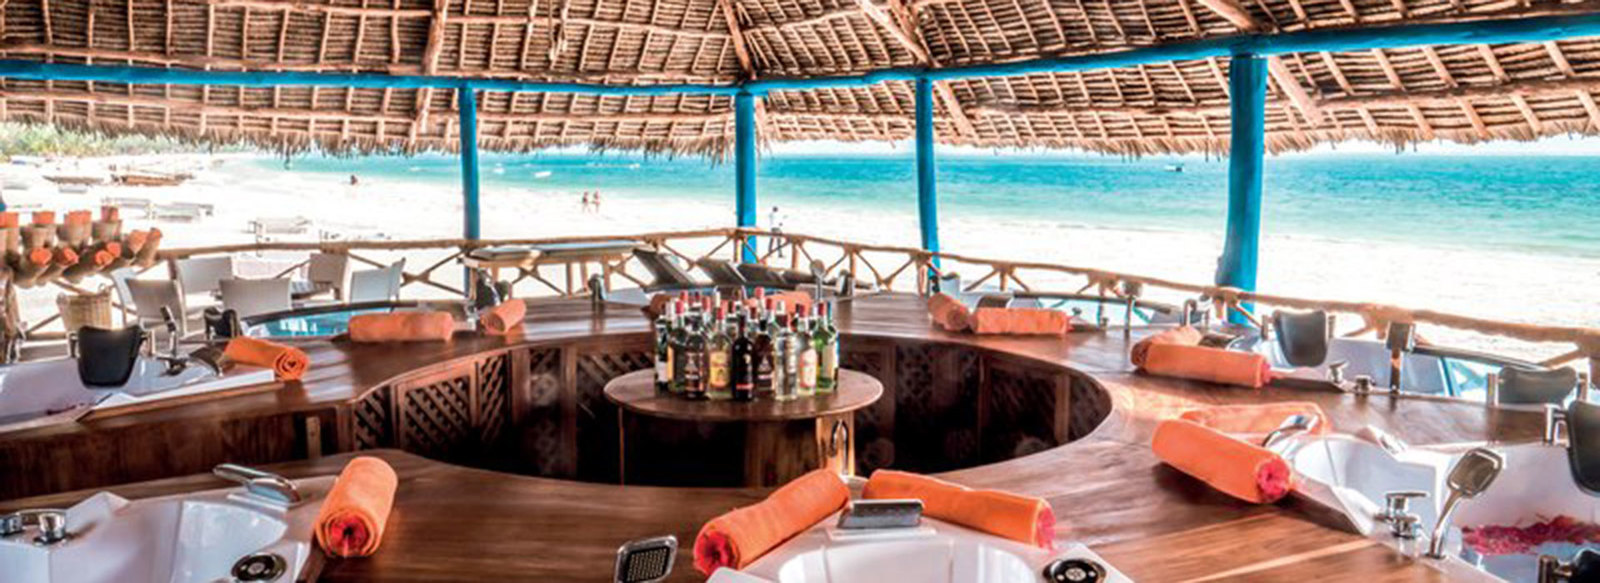 Storico Resort di Zanzibar